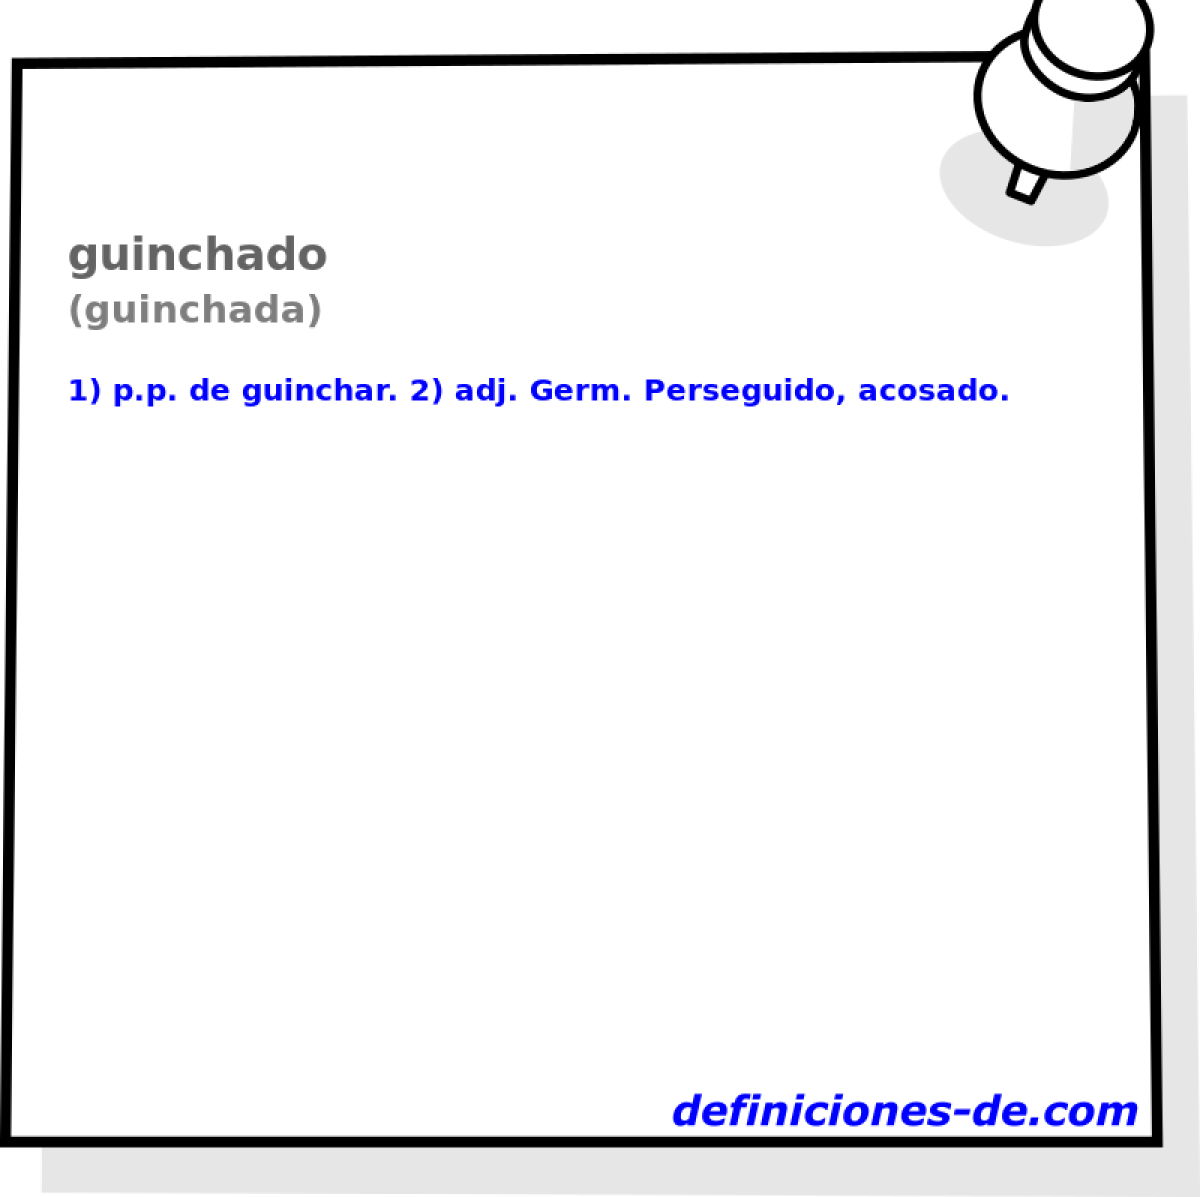 guinchado (guinchada)